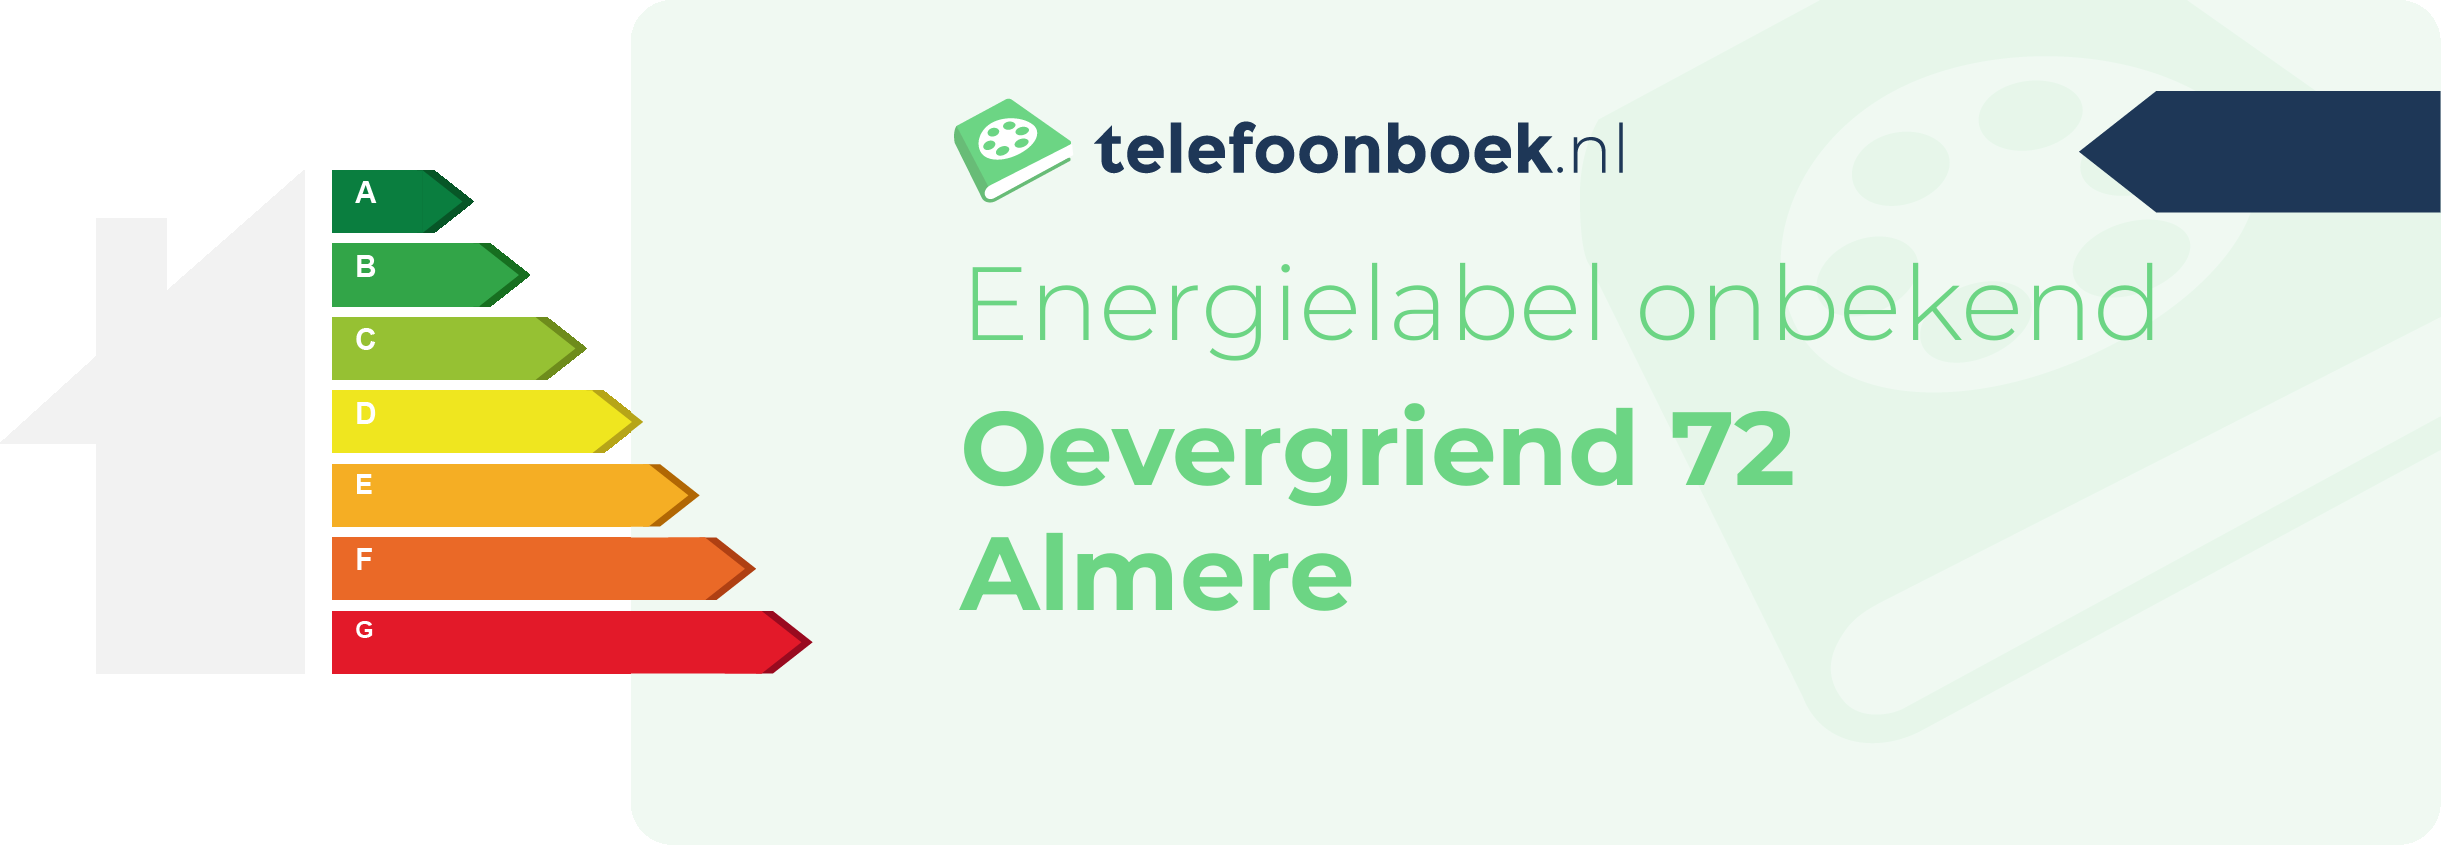 Energielabel Oevergriend 72 Almere